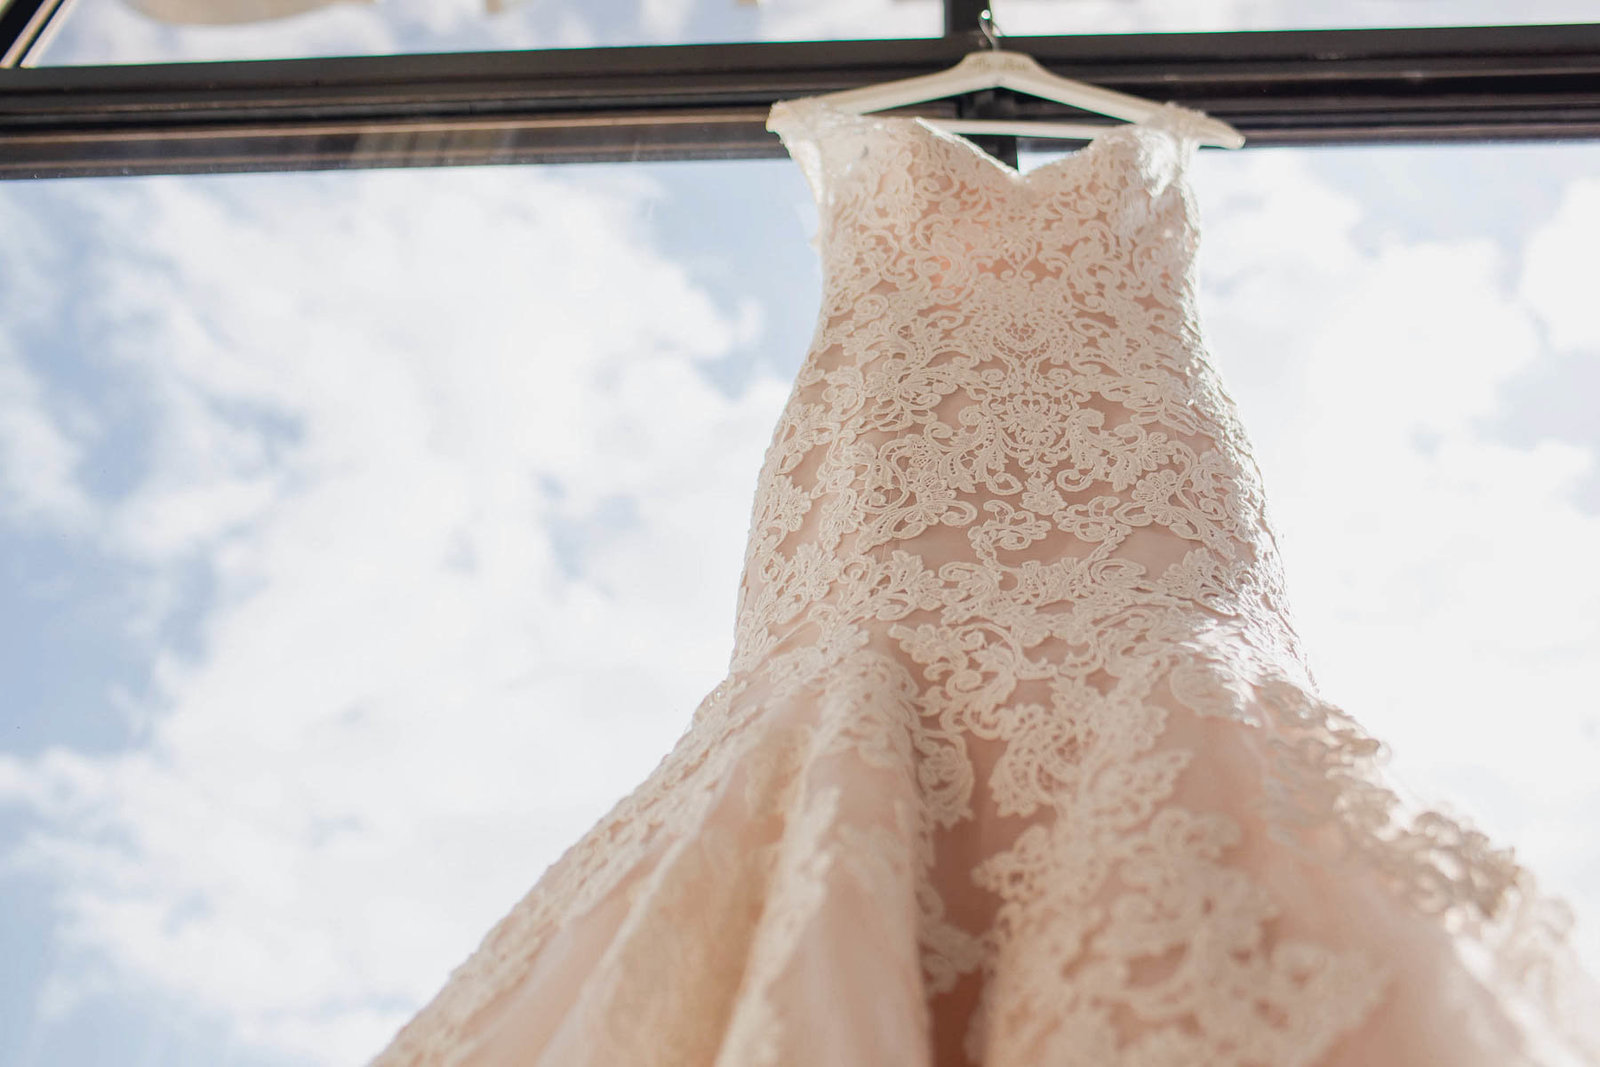 Dress hangs in window overlooking the water and boatyard, Destination wedding, Hyatt Regency, Sarasota, Florida